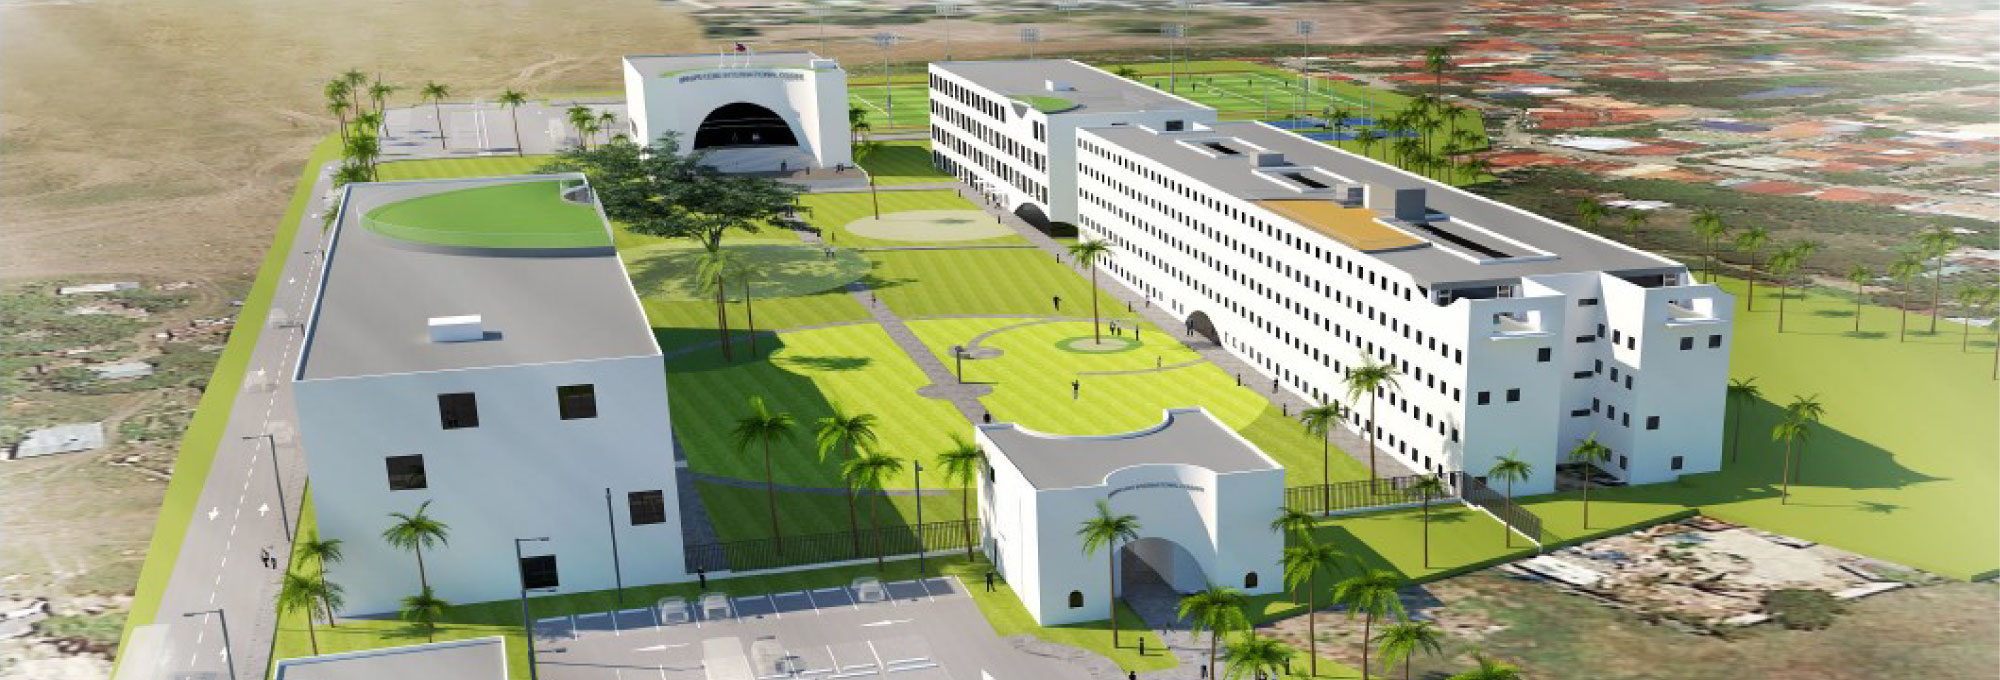 About Lapulapu-Cebu International College (LCIC)